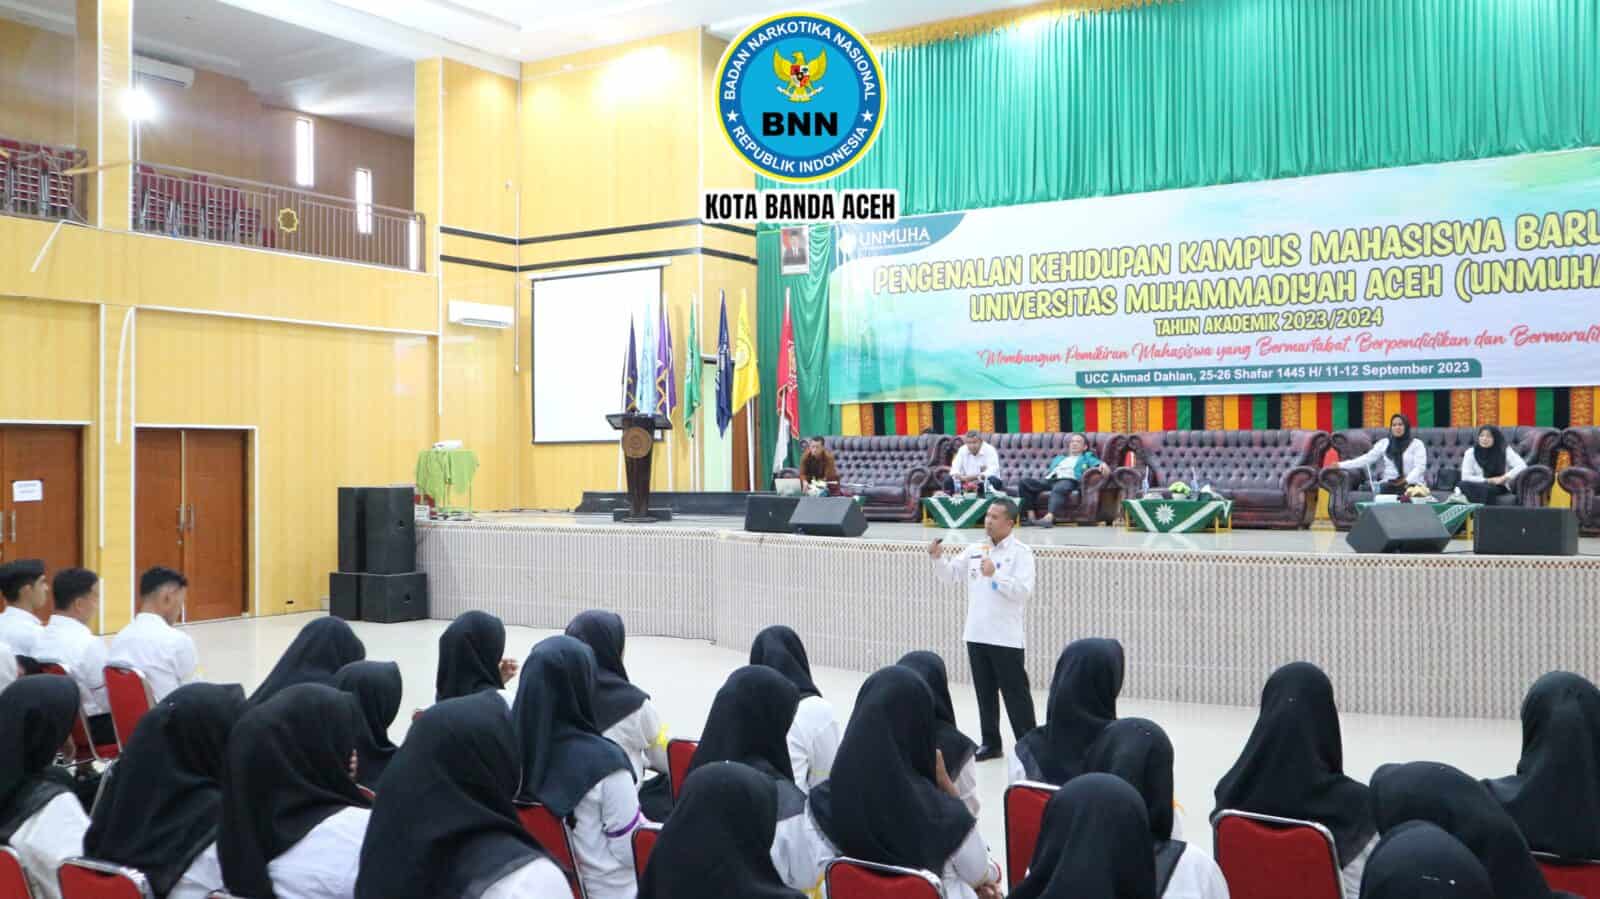 Sosialisasi Bahaya Penyalahgunaan Narkoba pada Kegiatan Pengenalan Kehidupan Kampus bagi Mahasiswa Baru (PKKMB) Universitas Muhammadiyah Aceh T.A 2023/2024